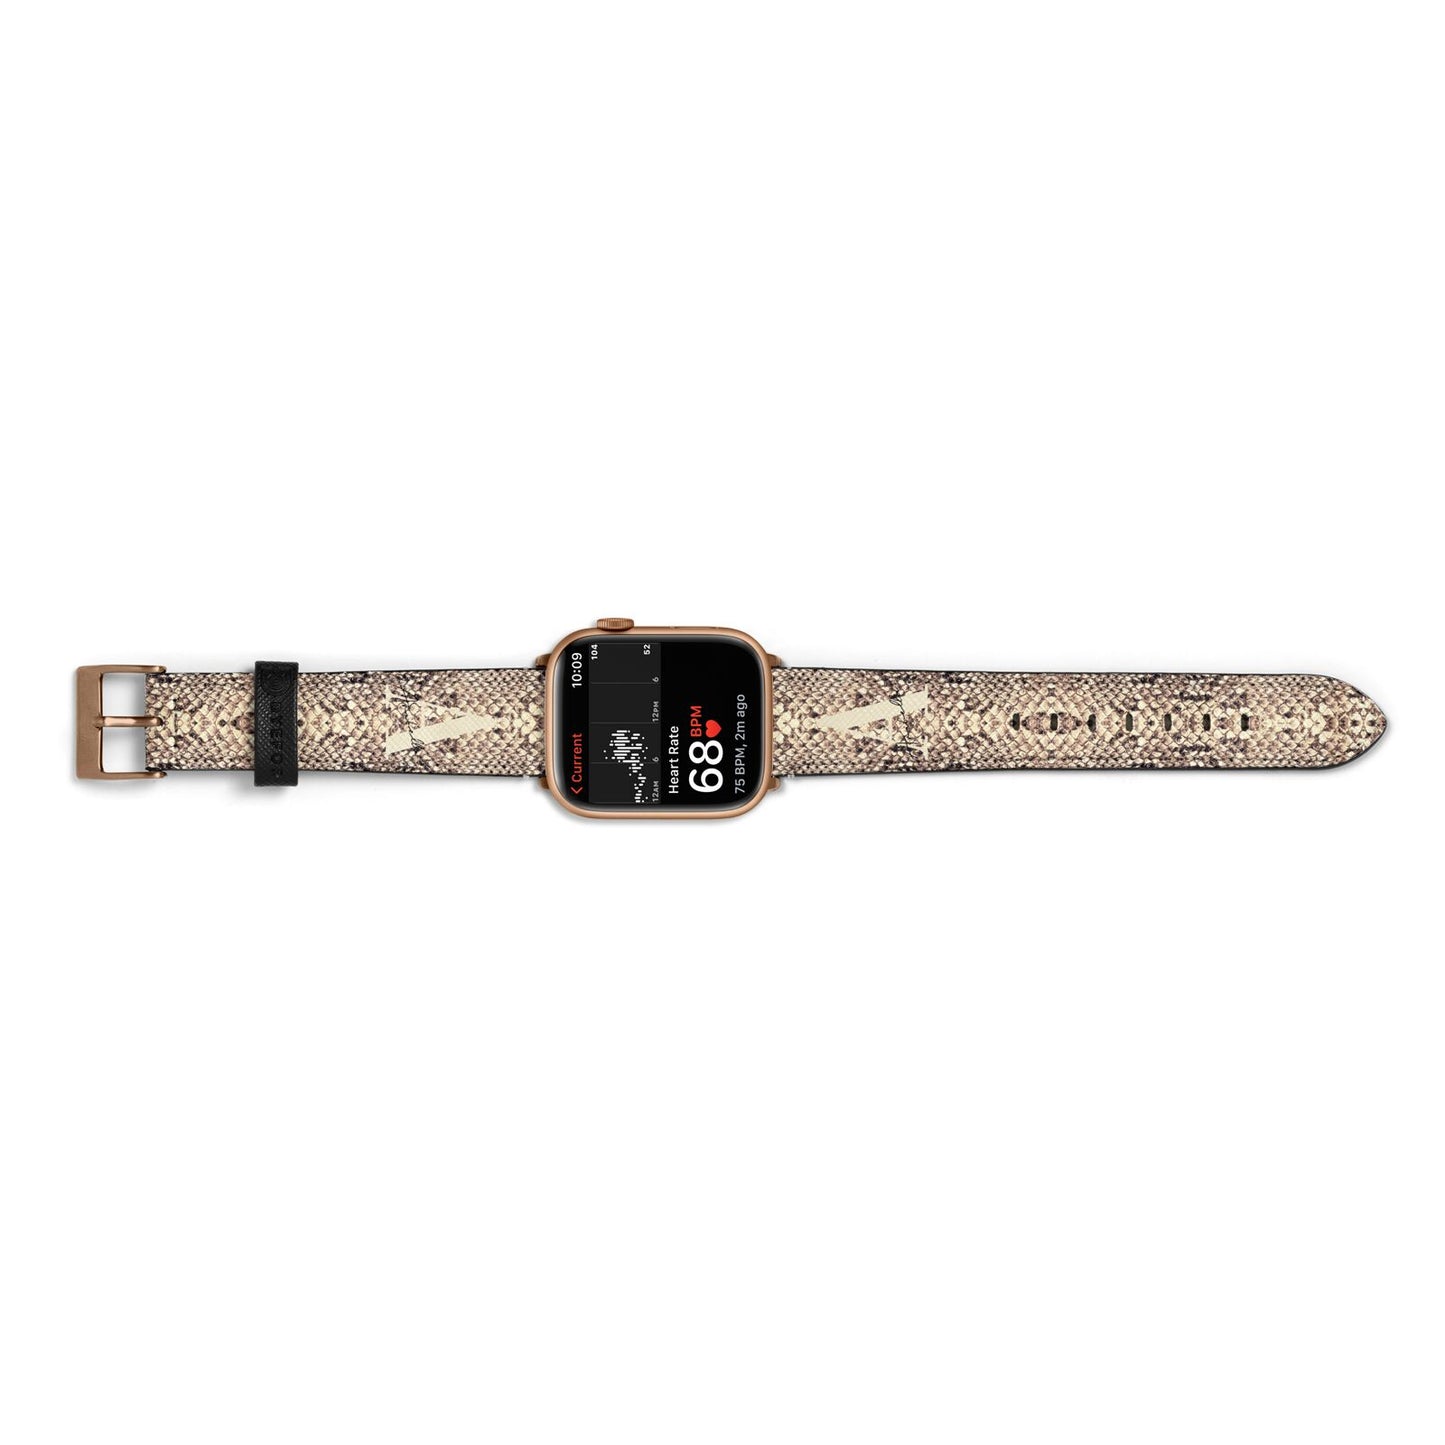 Personalised Snake Skin Effect Apple Watch Strap Size 38mm Landscape Image Gold Hardware